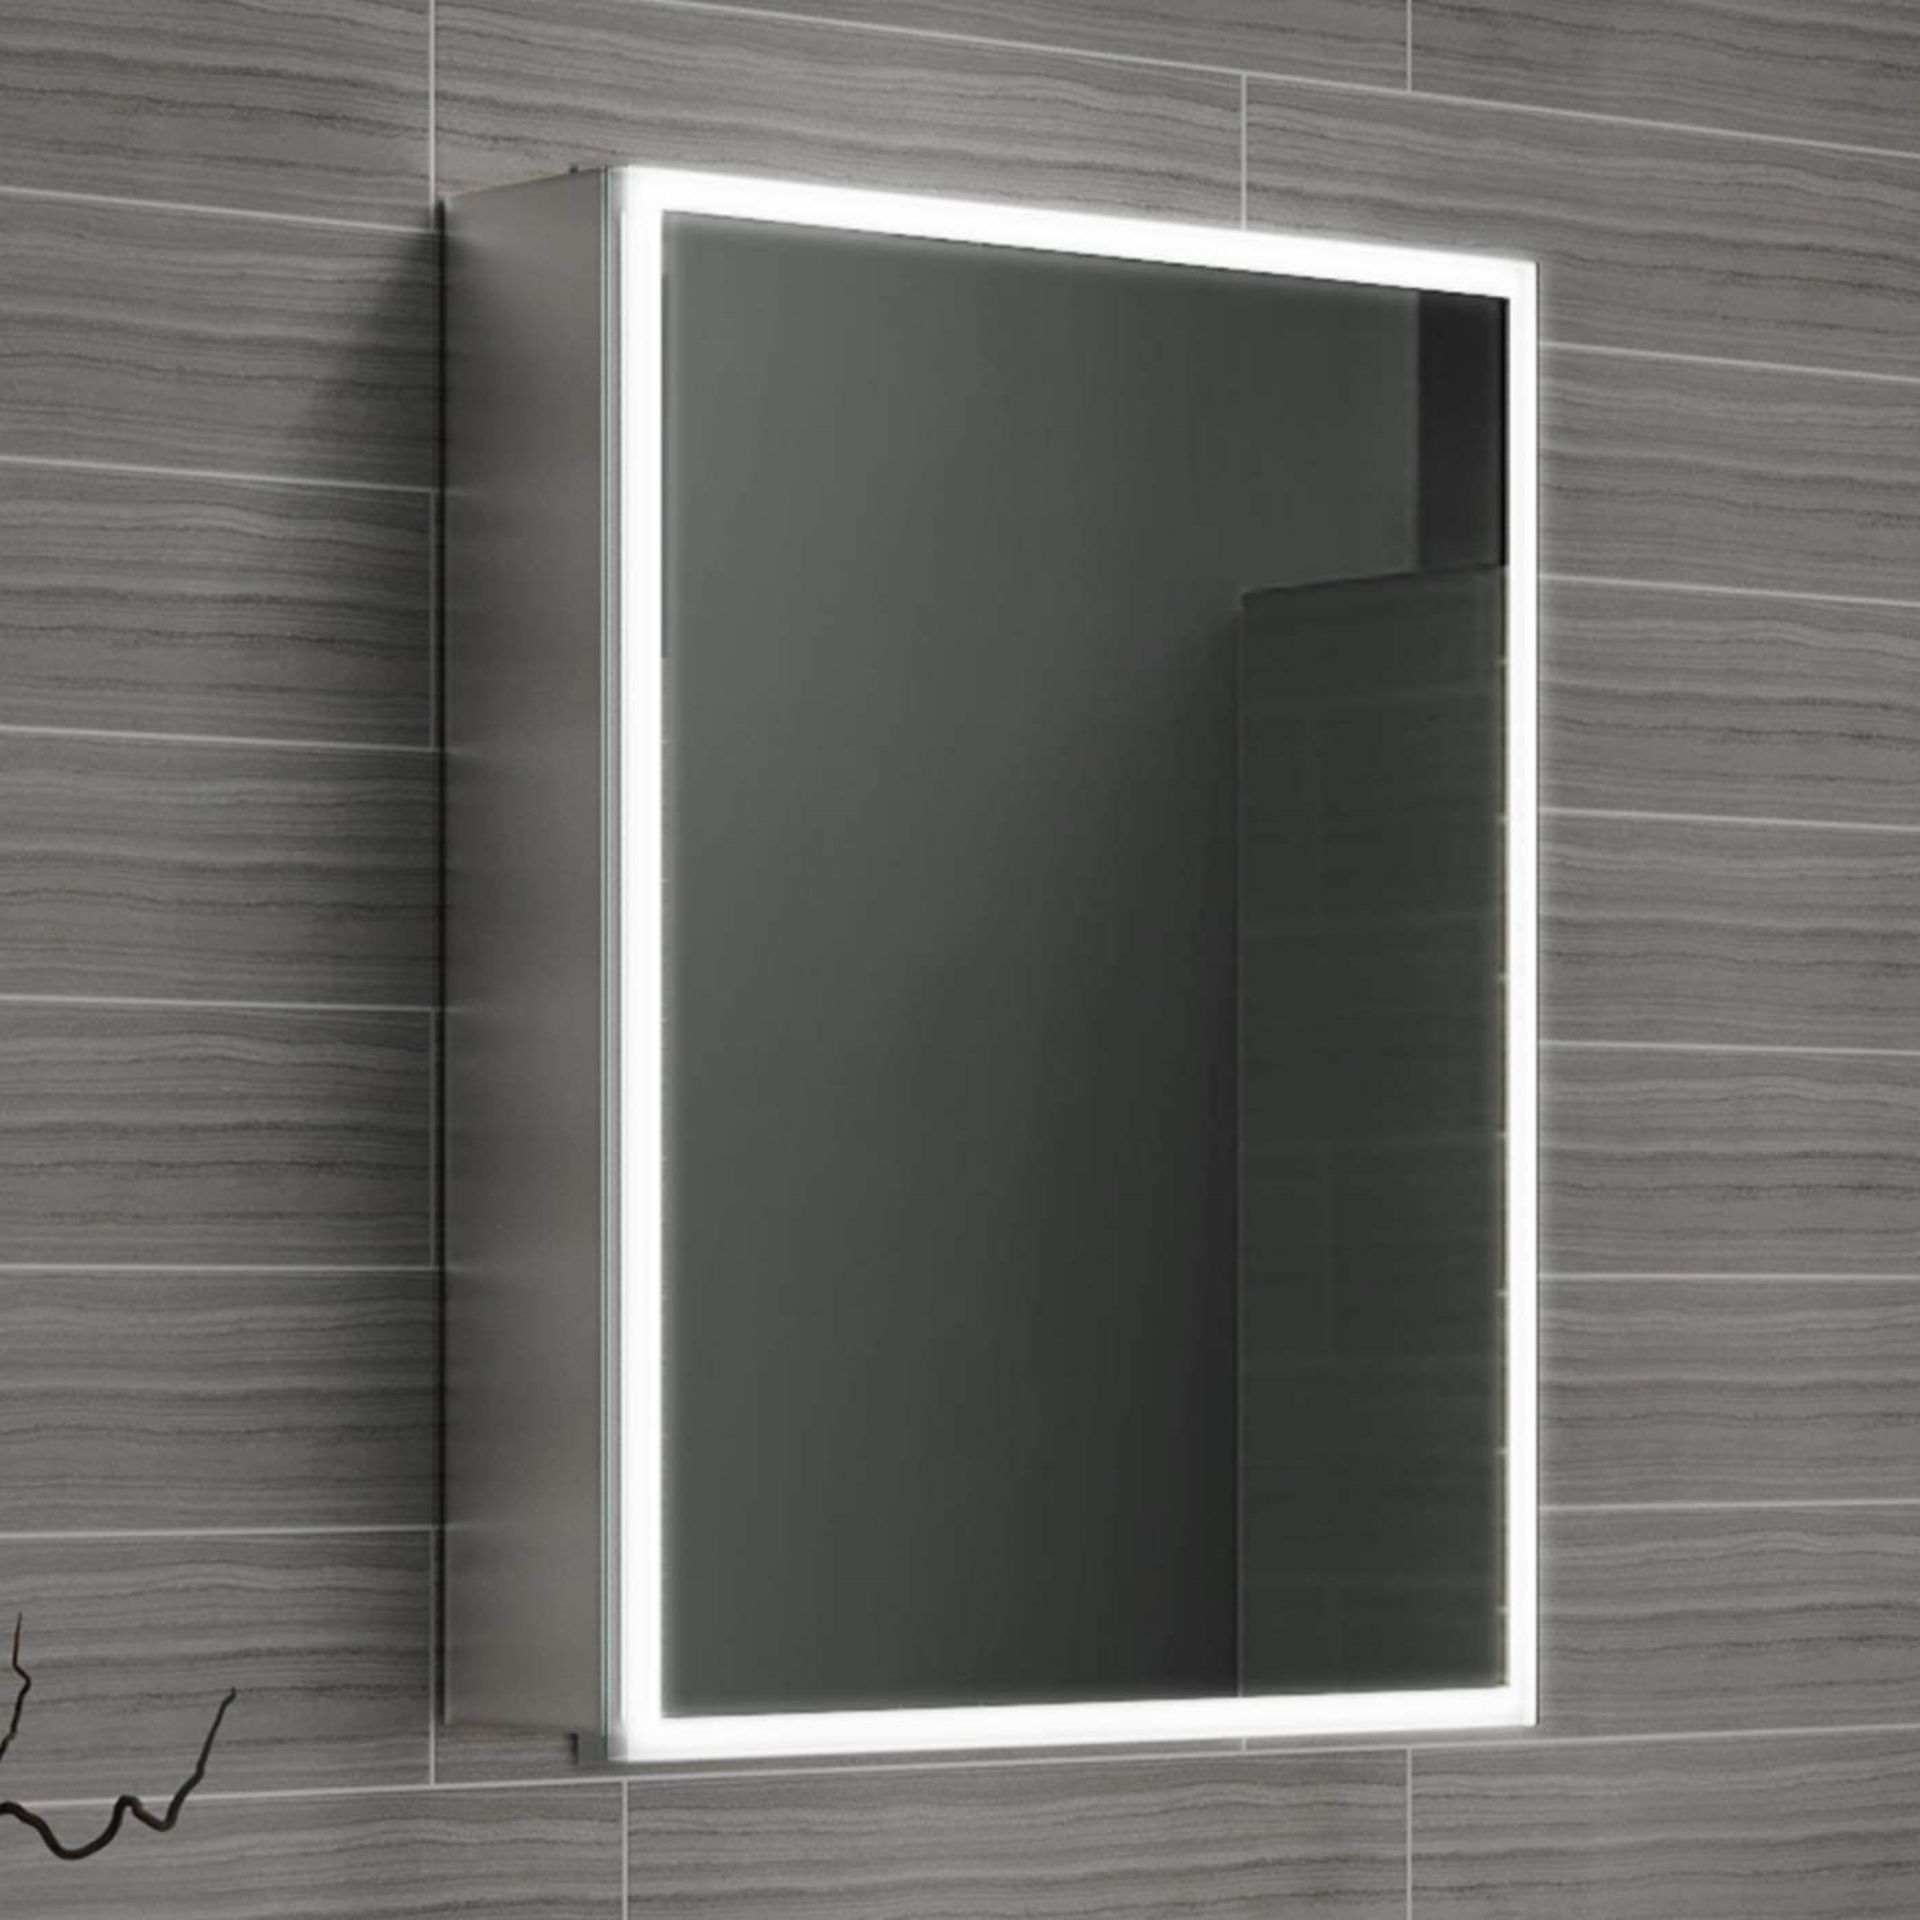 NEW & BOXED 450 x 600 Cosmic Illuminated Led Mirror Cabinet. RRP £749.99.Mc161.We Love This Mi...